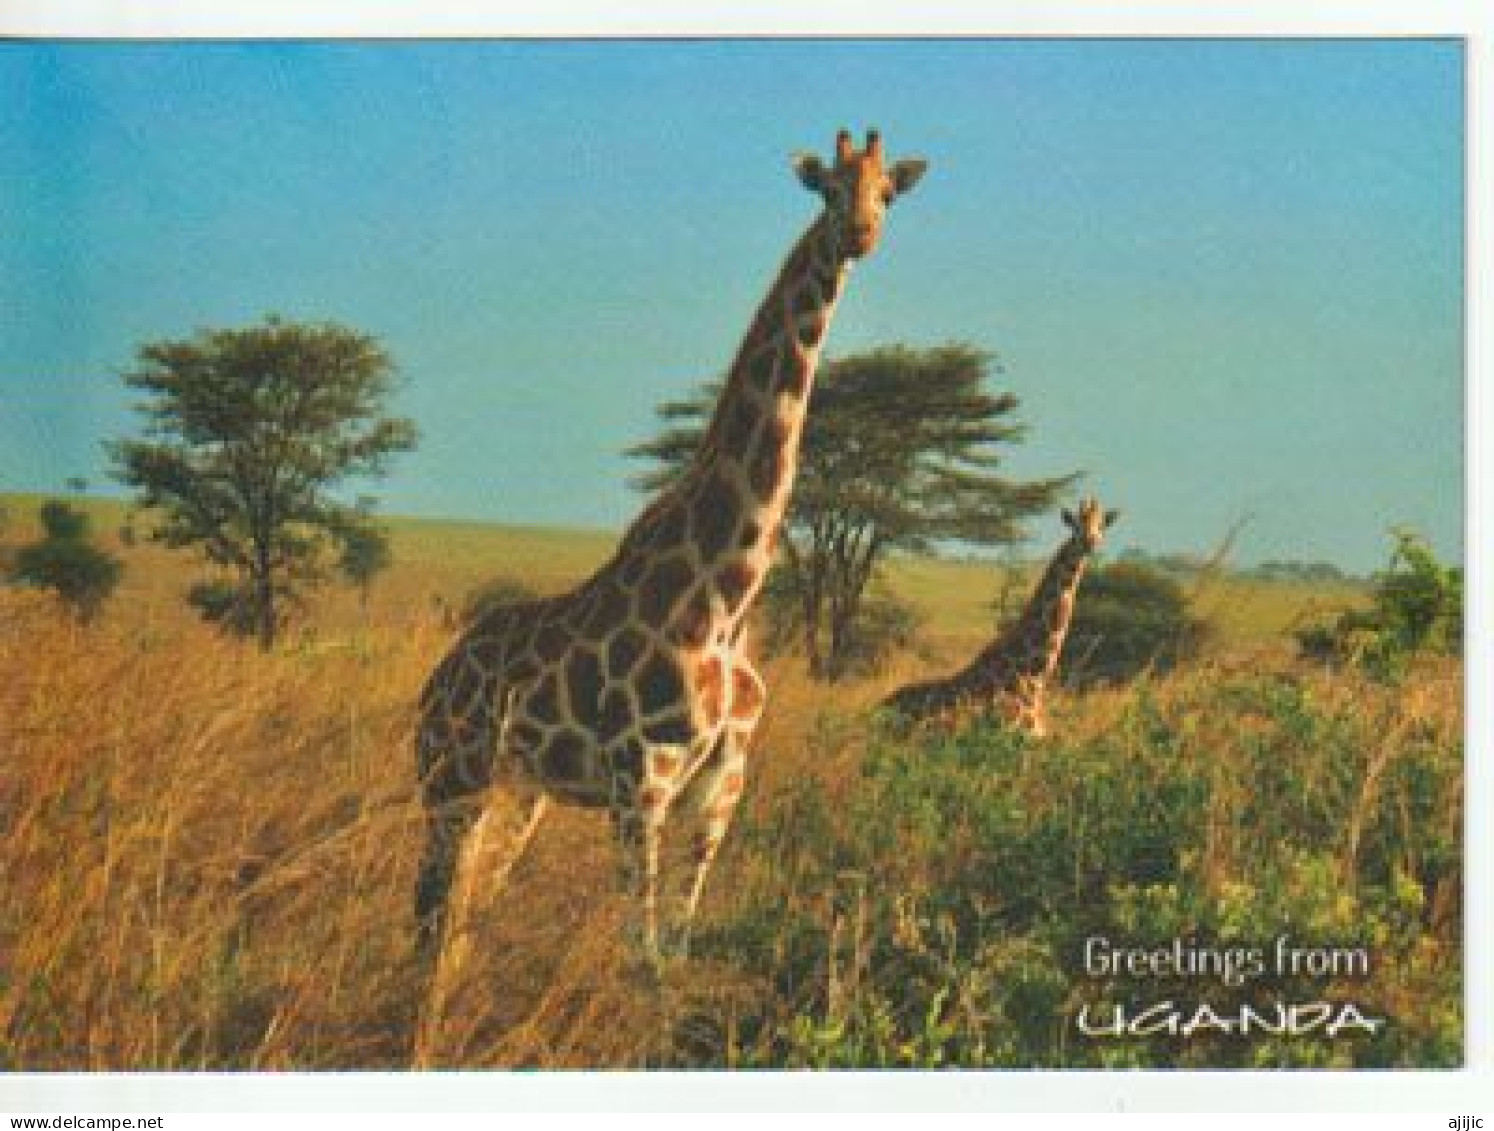 Uganda's Giraffe (Giraffe Conservation Foundation), Edition Wildlife  Friends.  Unused - Giraffes